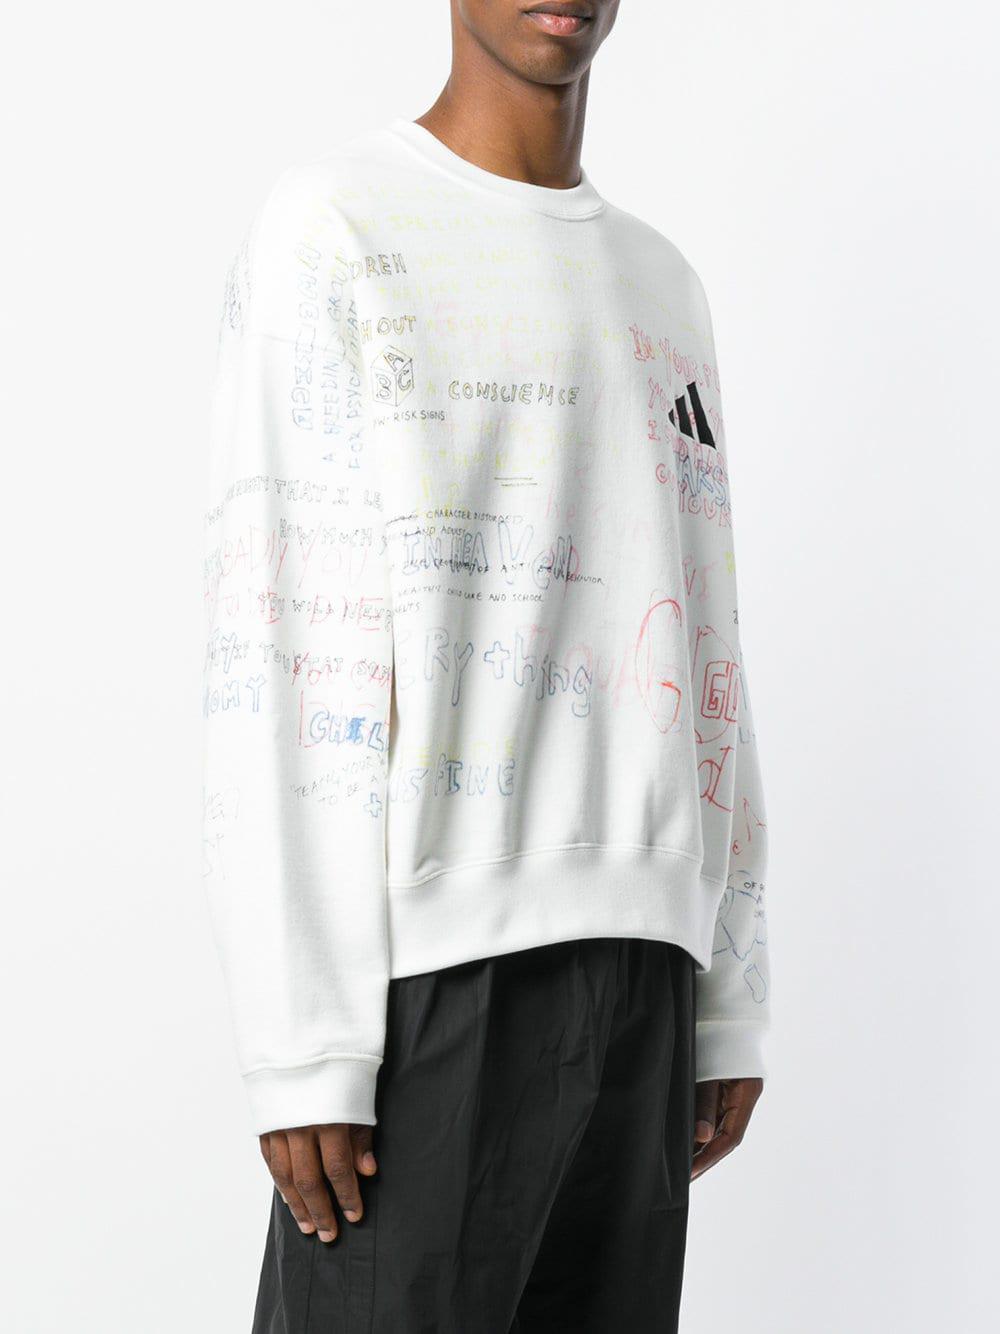 Yeezy Season 5 Handwriting Crew Sweater in White for Men - Lyst